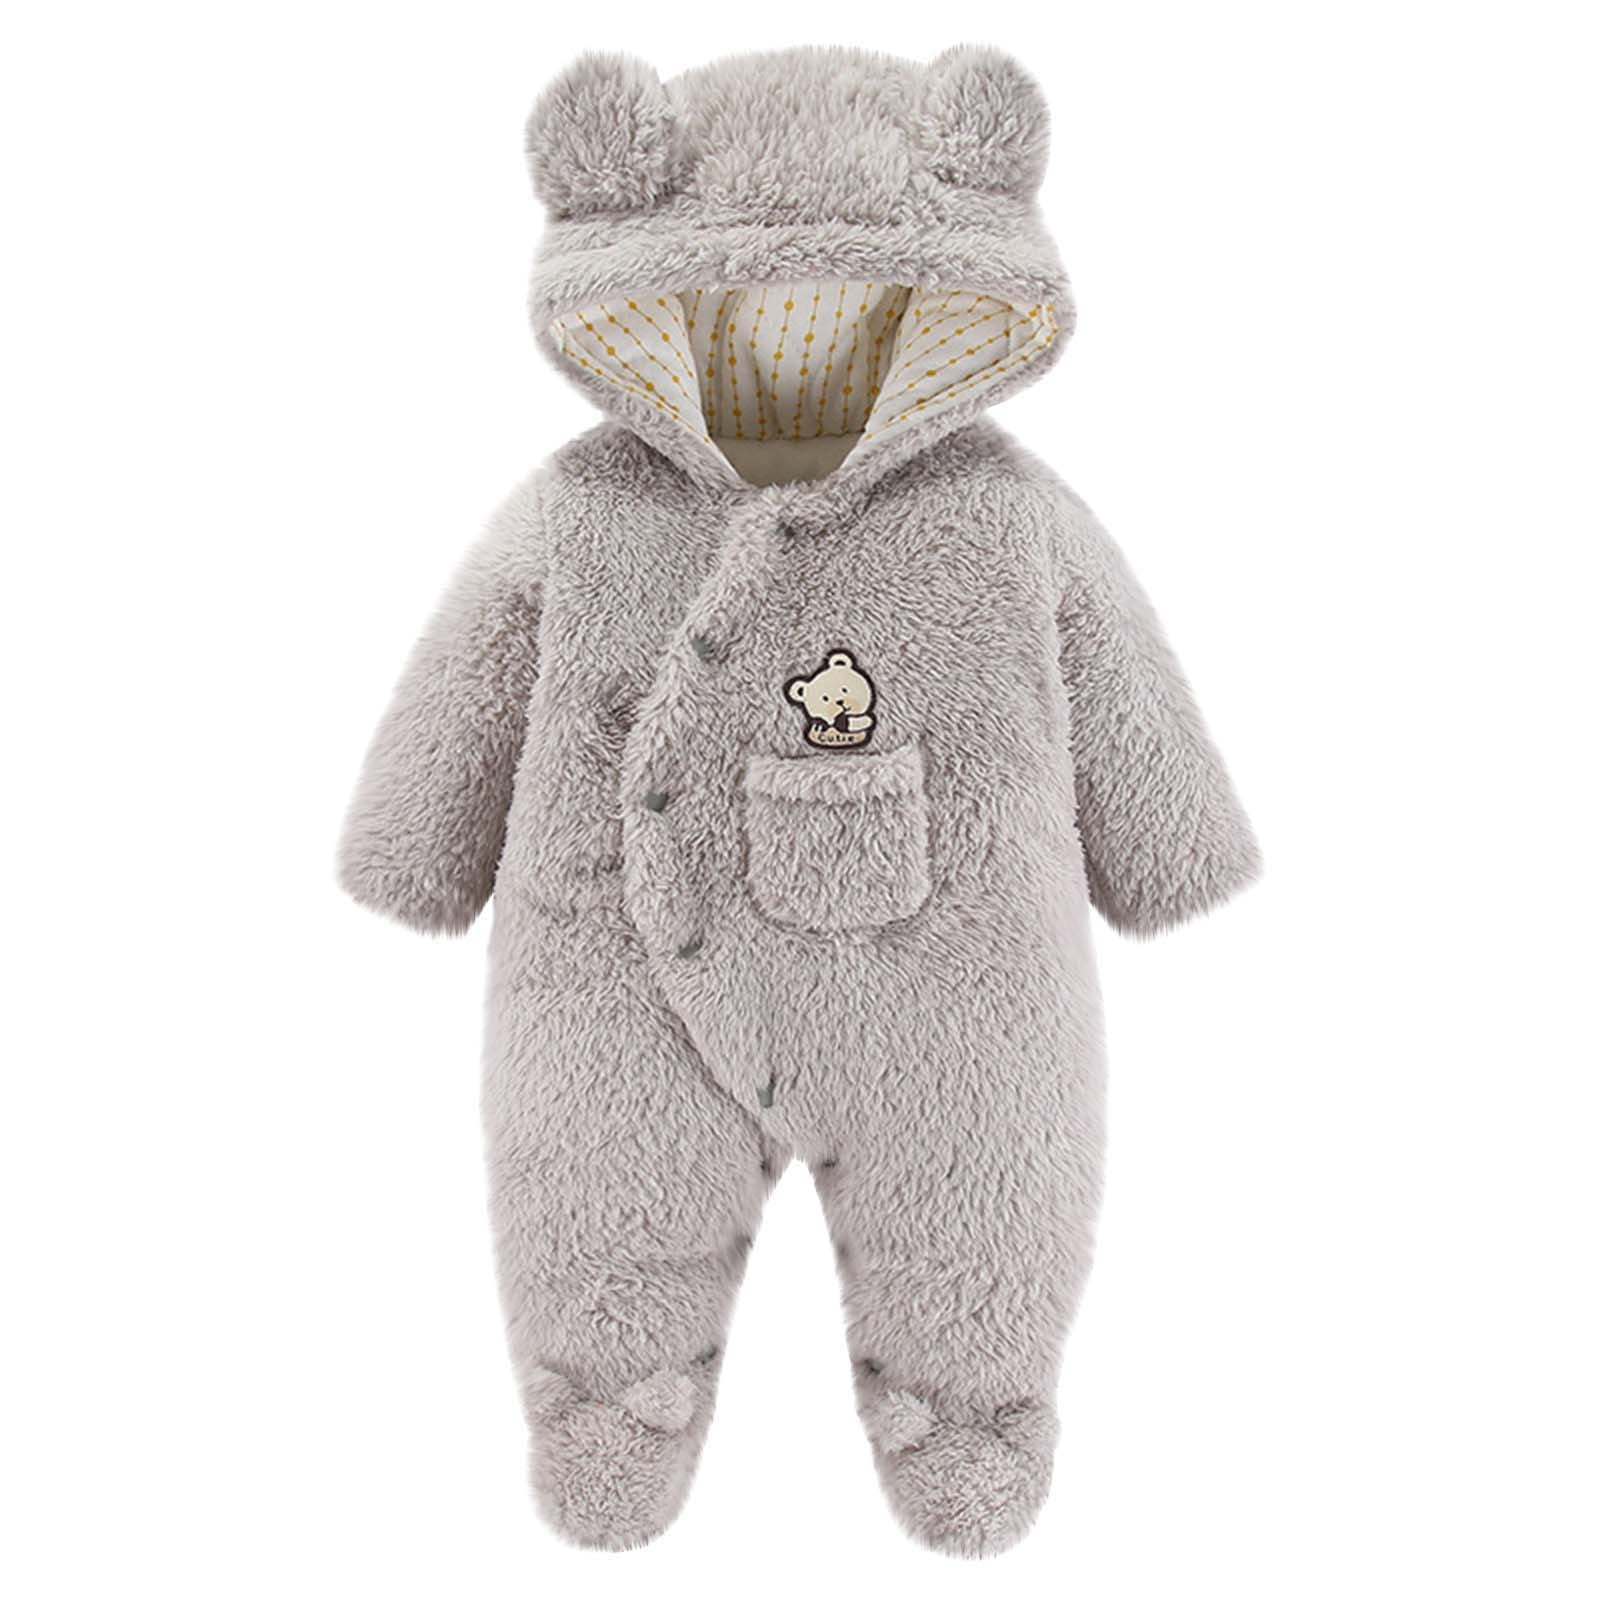 Baby Boy Cartonn Bear Pattern O-Neck Casual Hoodies – MyKids-USA™